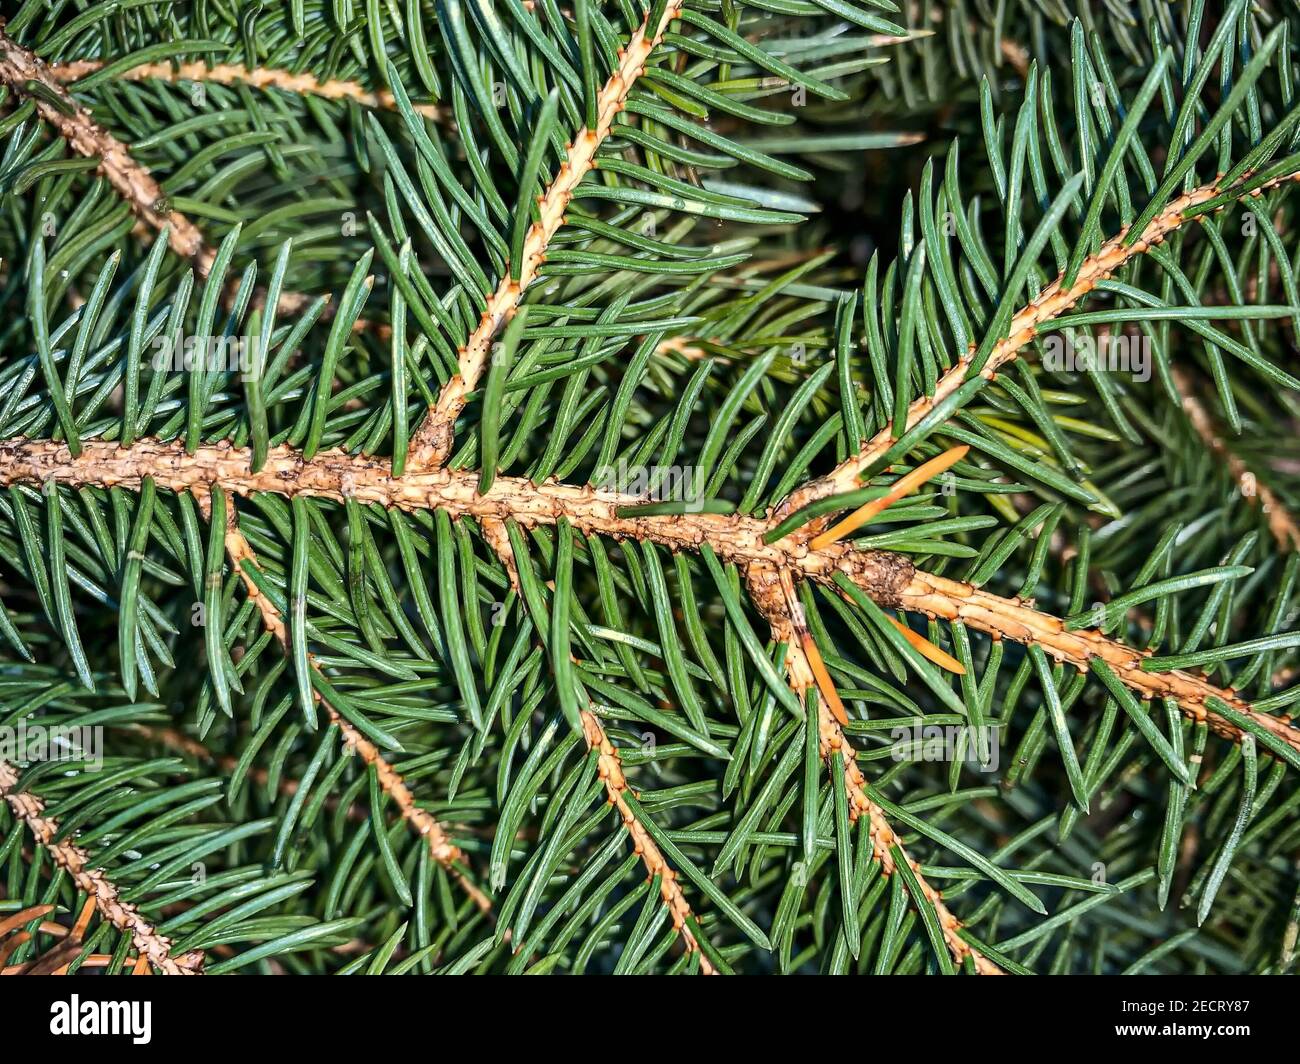 green spiky pine needles close up Stock Photo